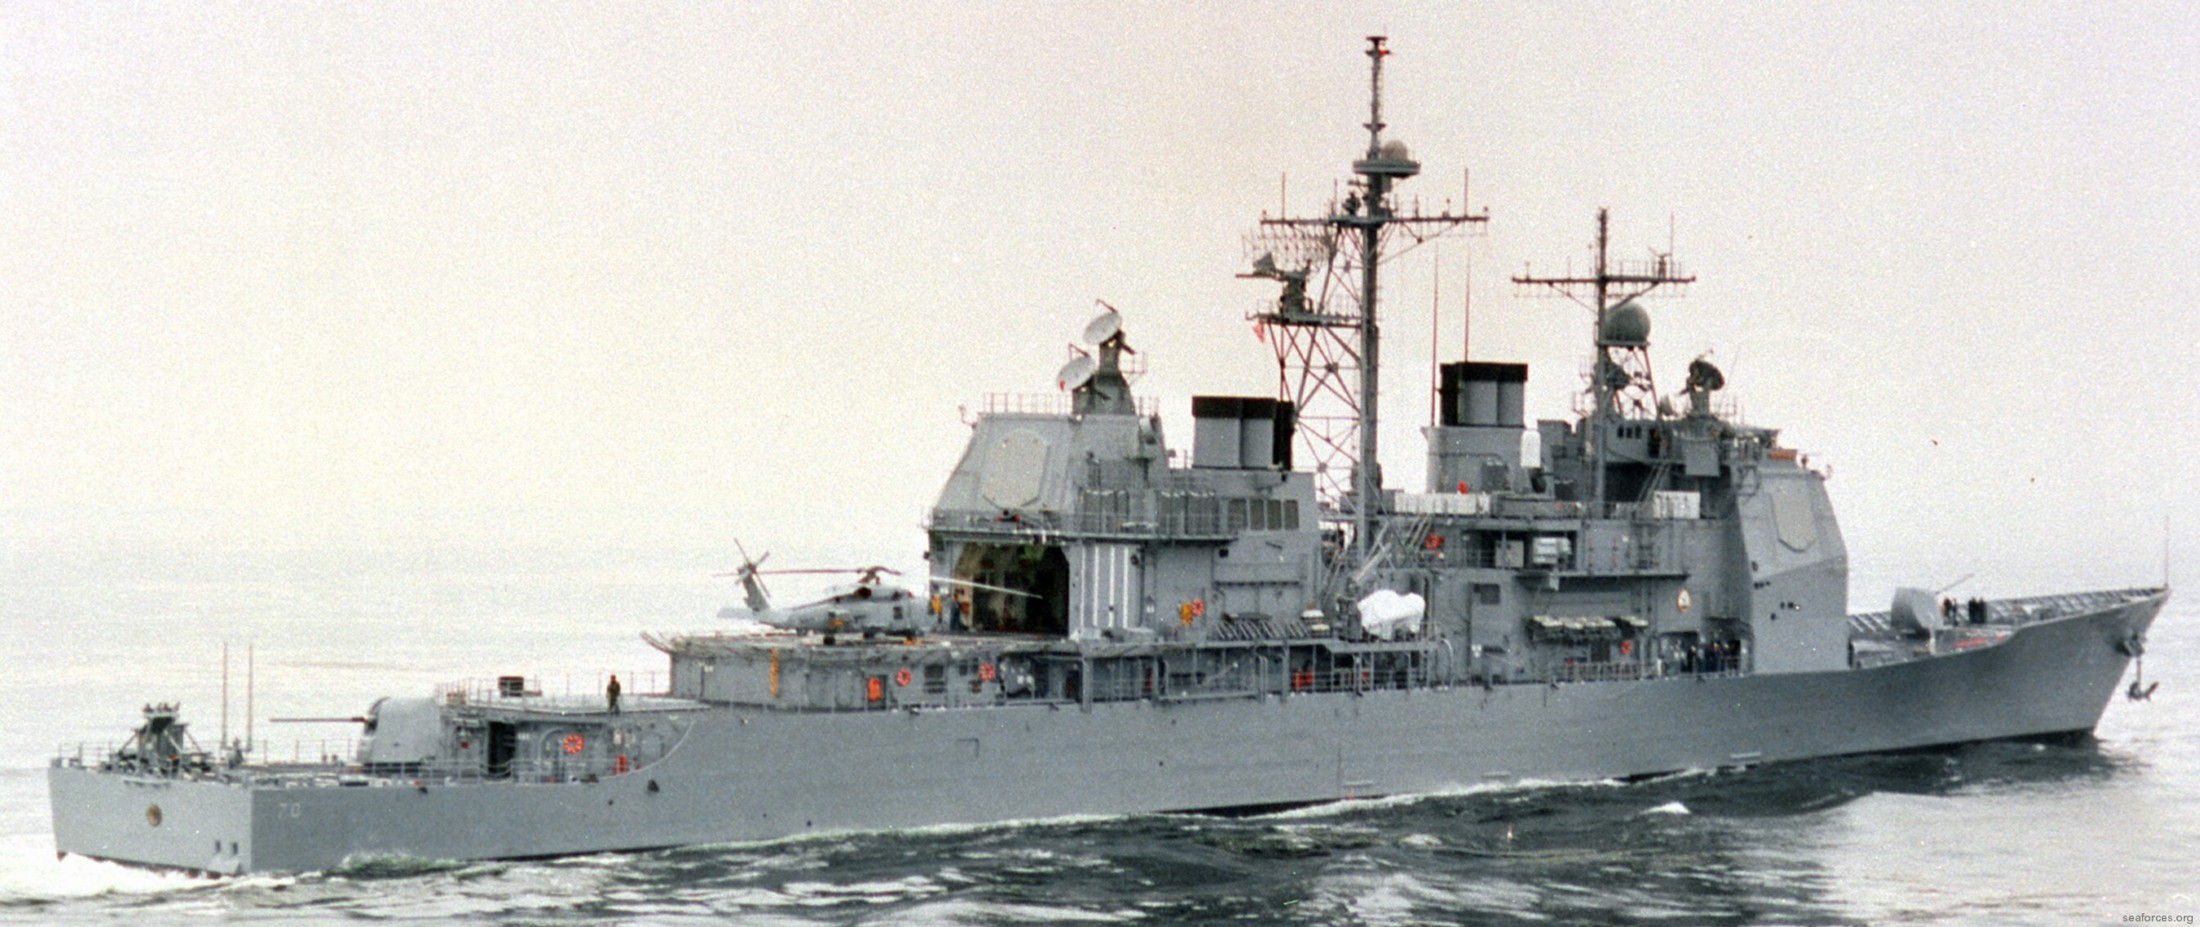 cg-70 uss lake erie ticonderoga class guided missile cruiser navy 76